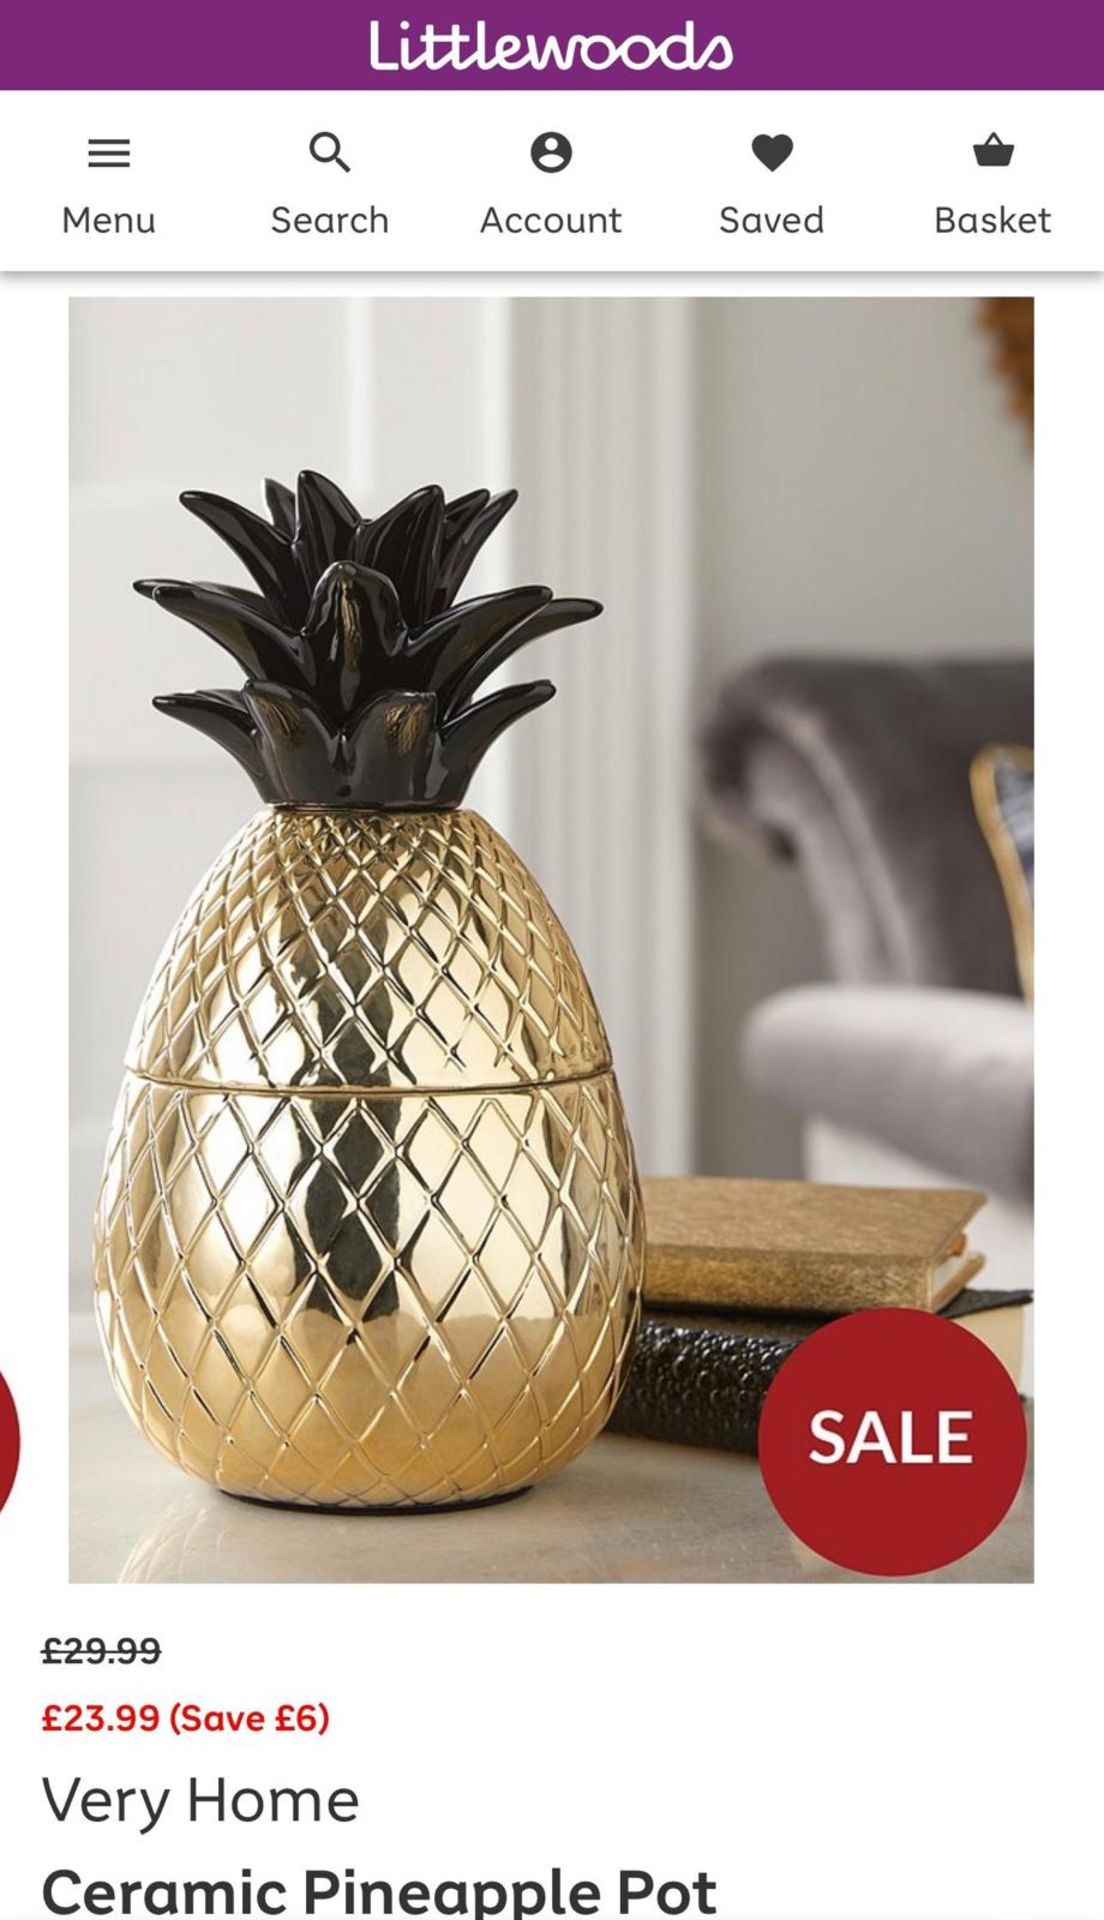 RAW RETURN - Very Home Ceramic Pineapple Pot